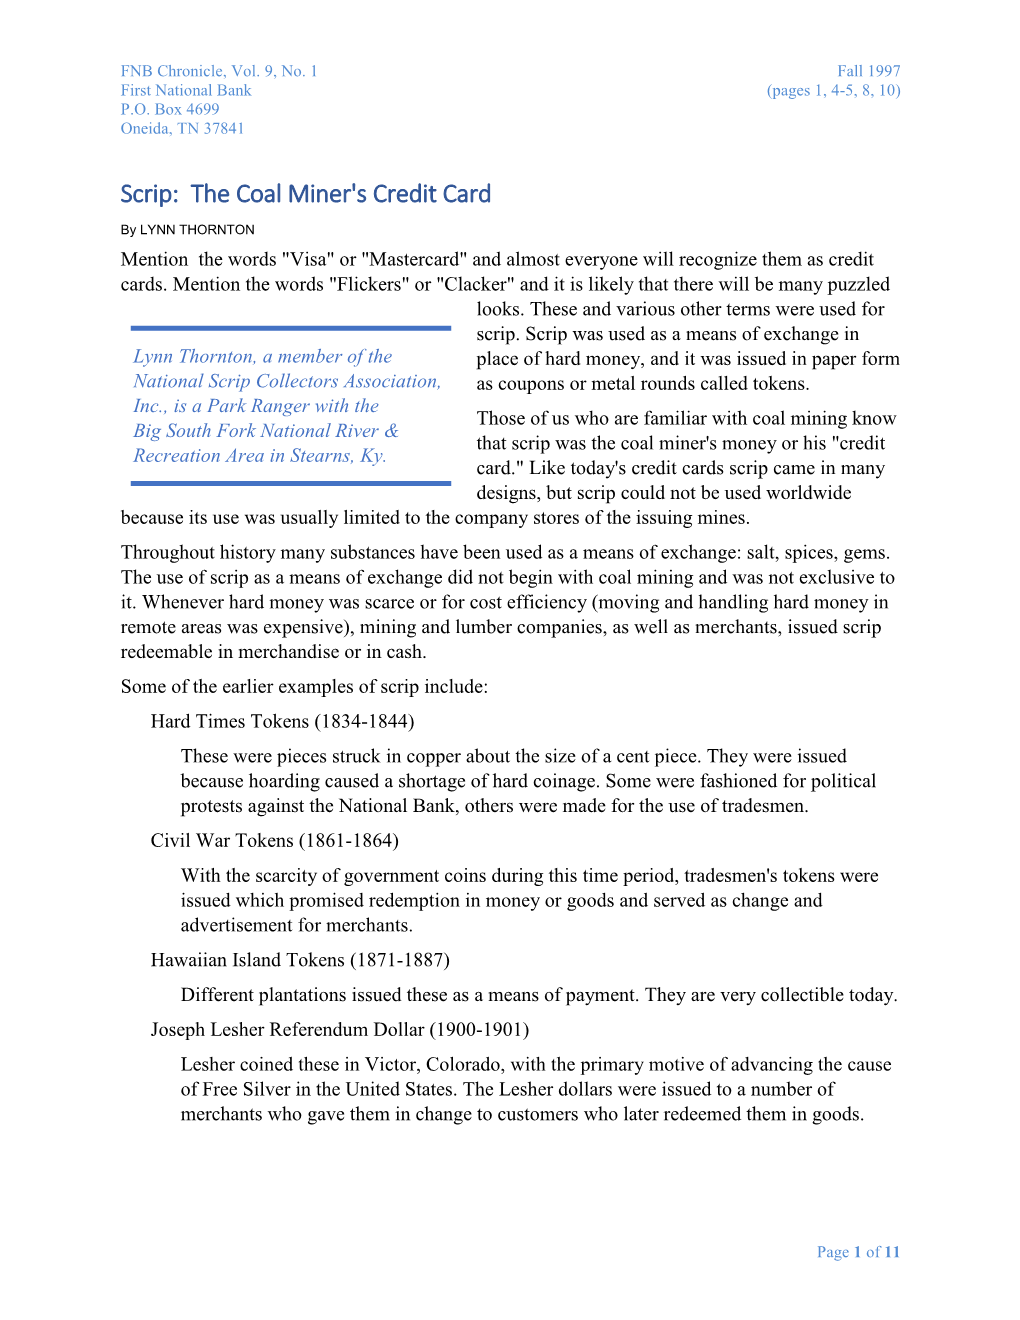 Scrip: the Coal Miner's Credit Card